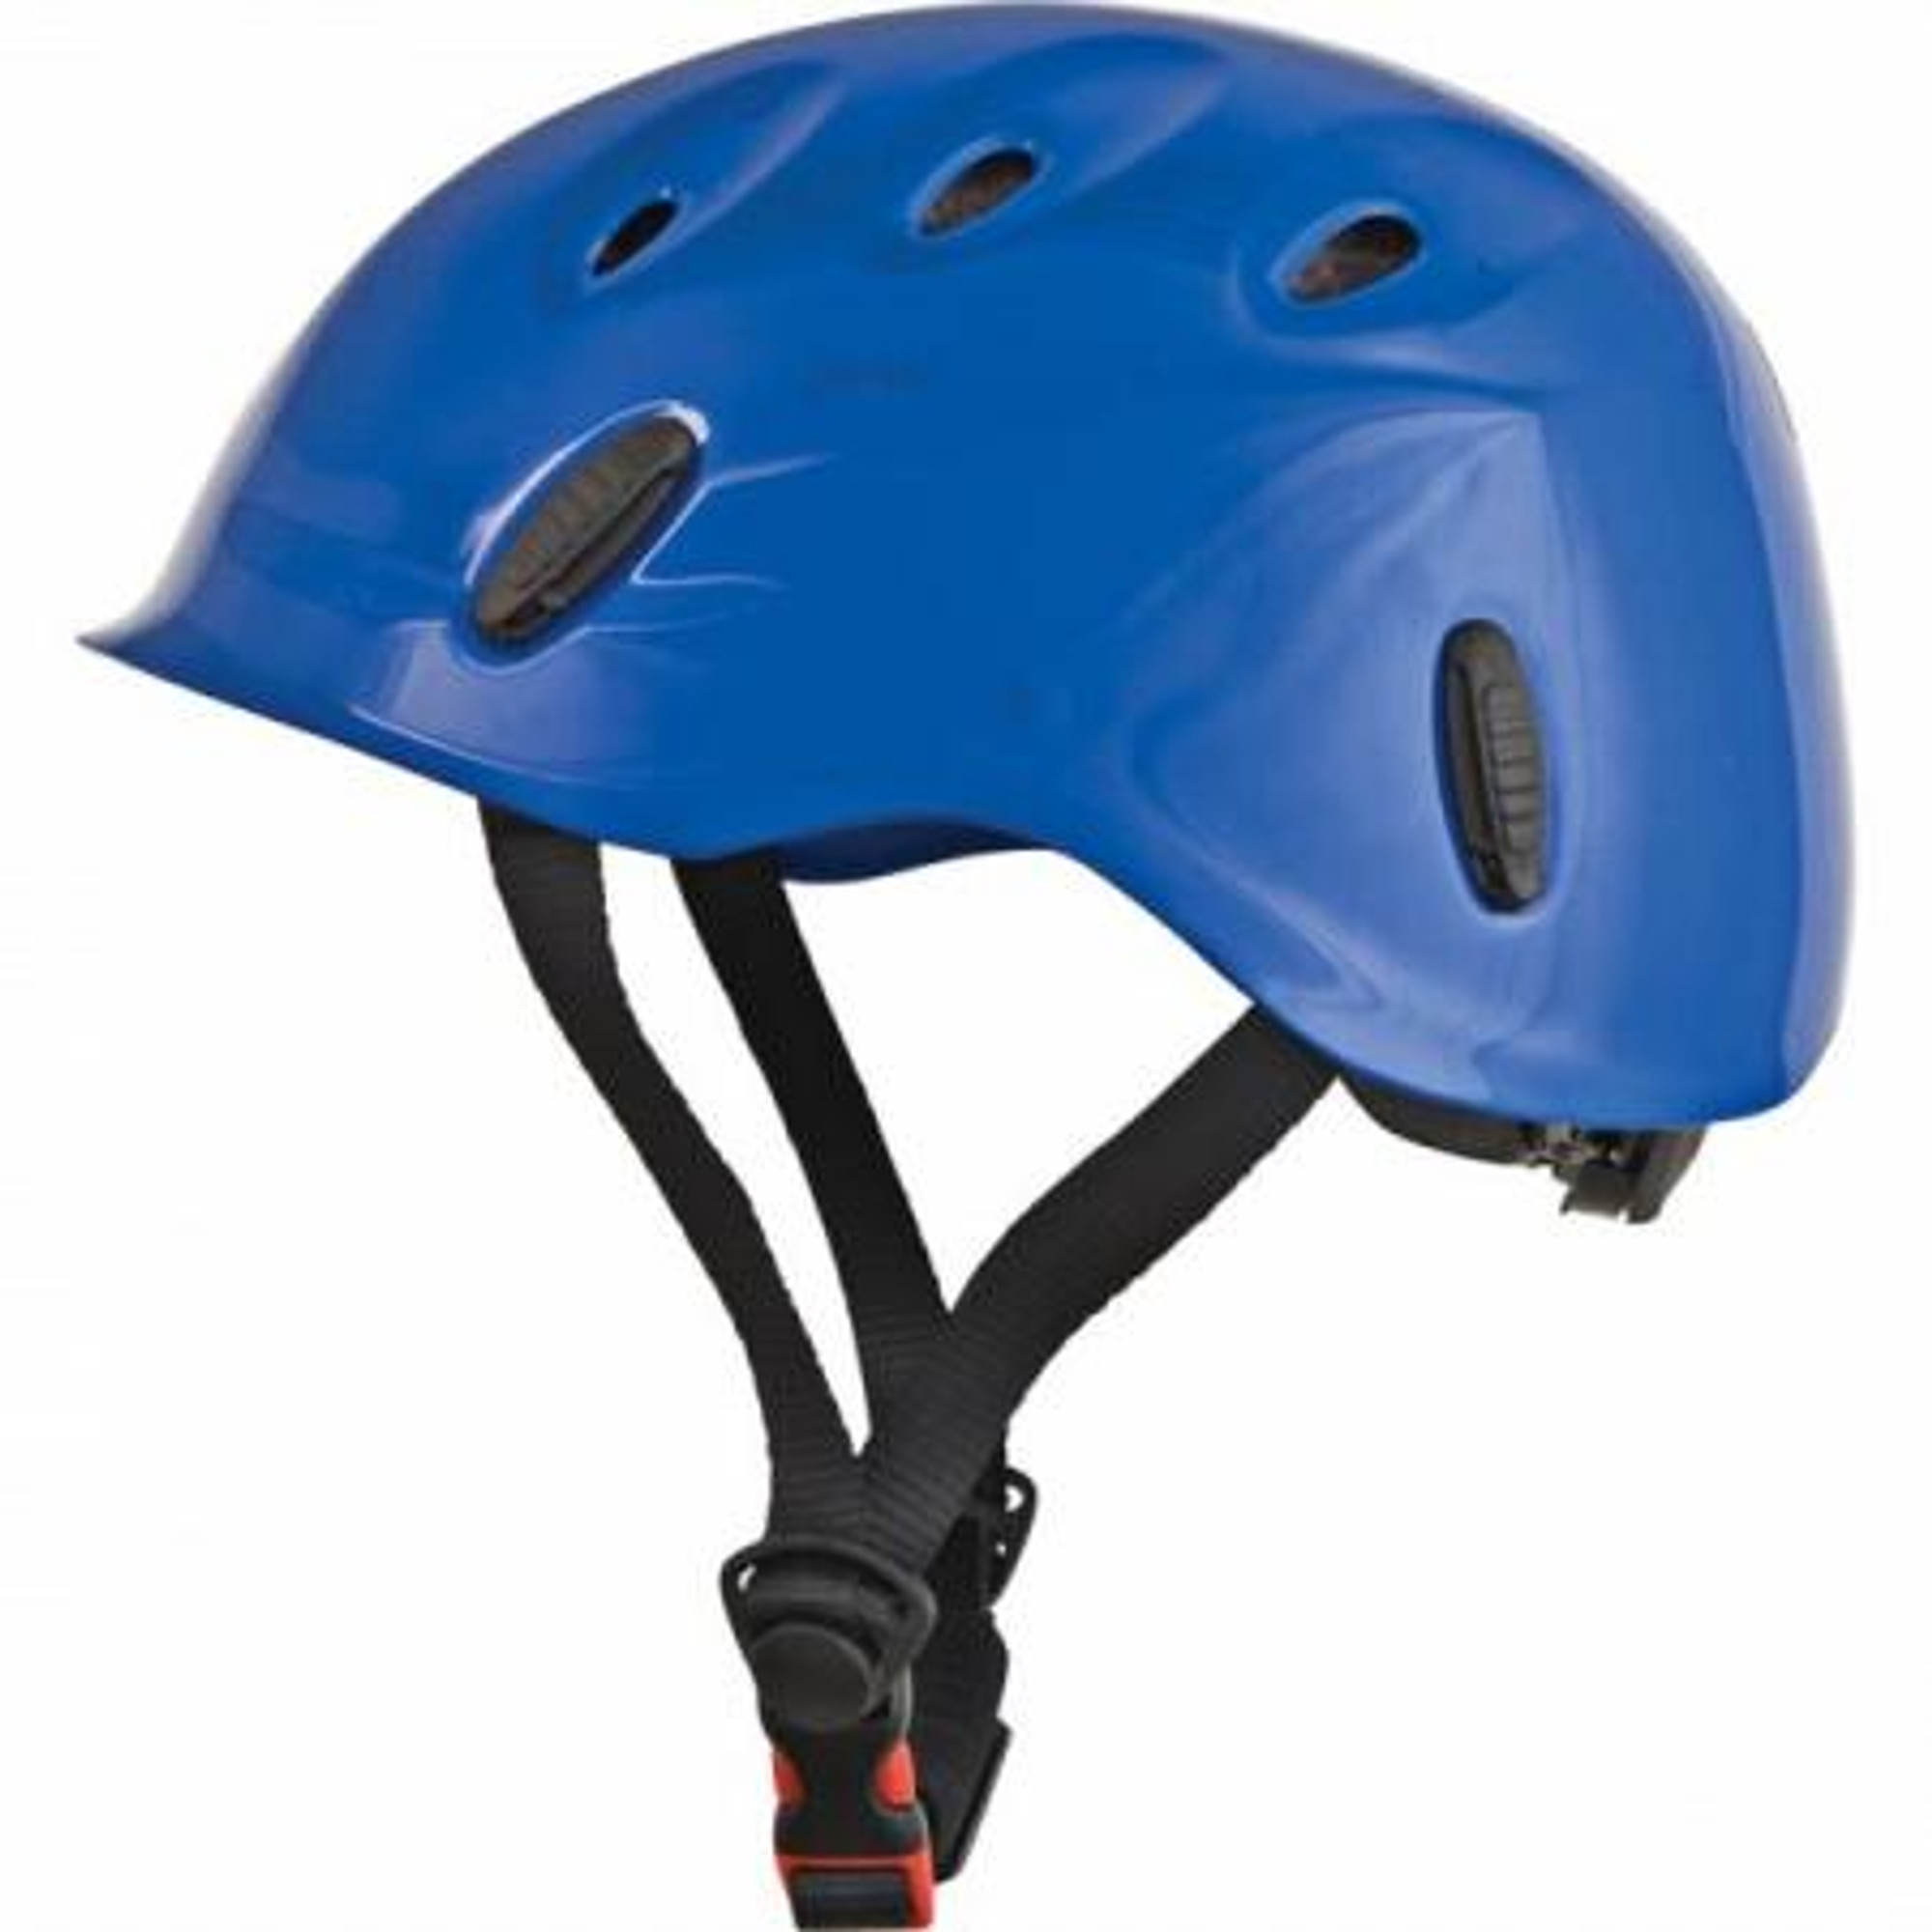 Advanced Base Camp Combi Rock Helmet - Blue